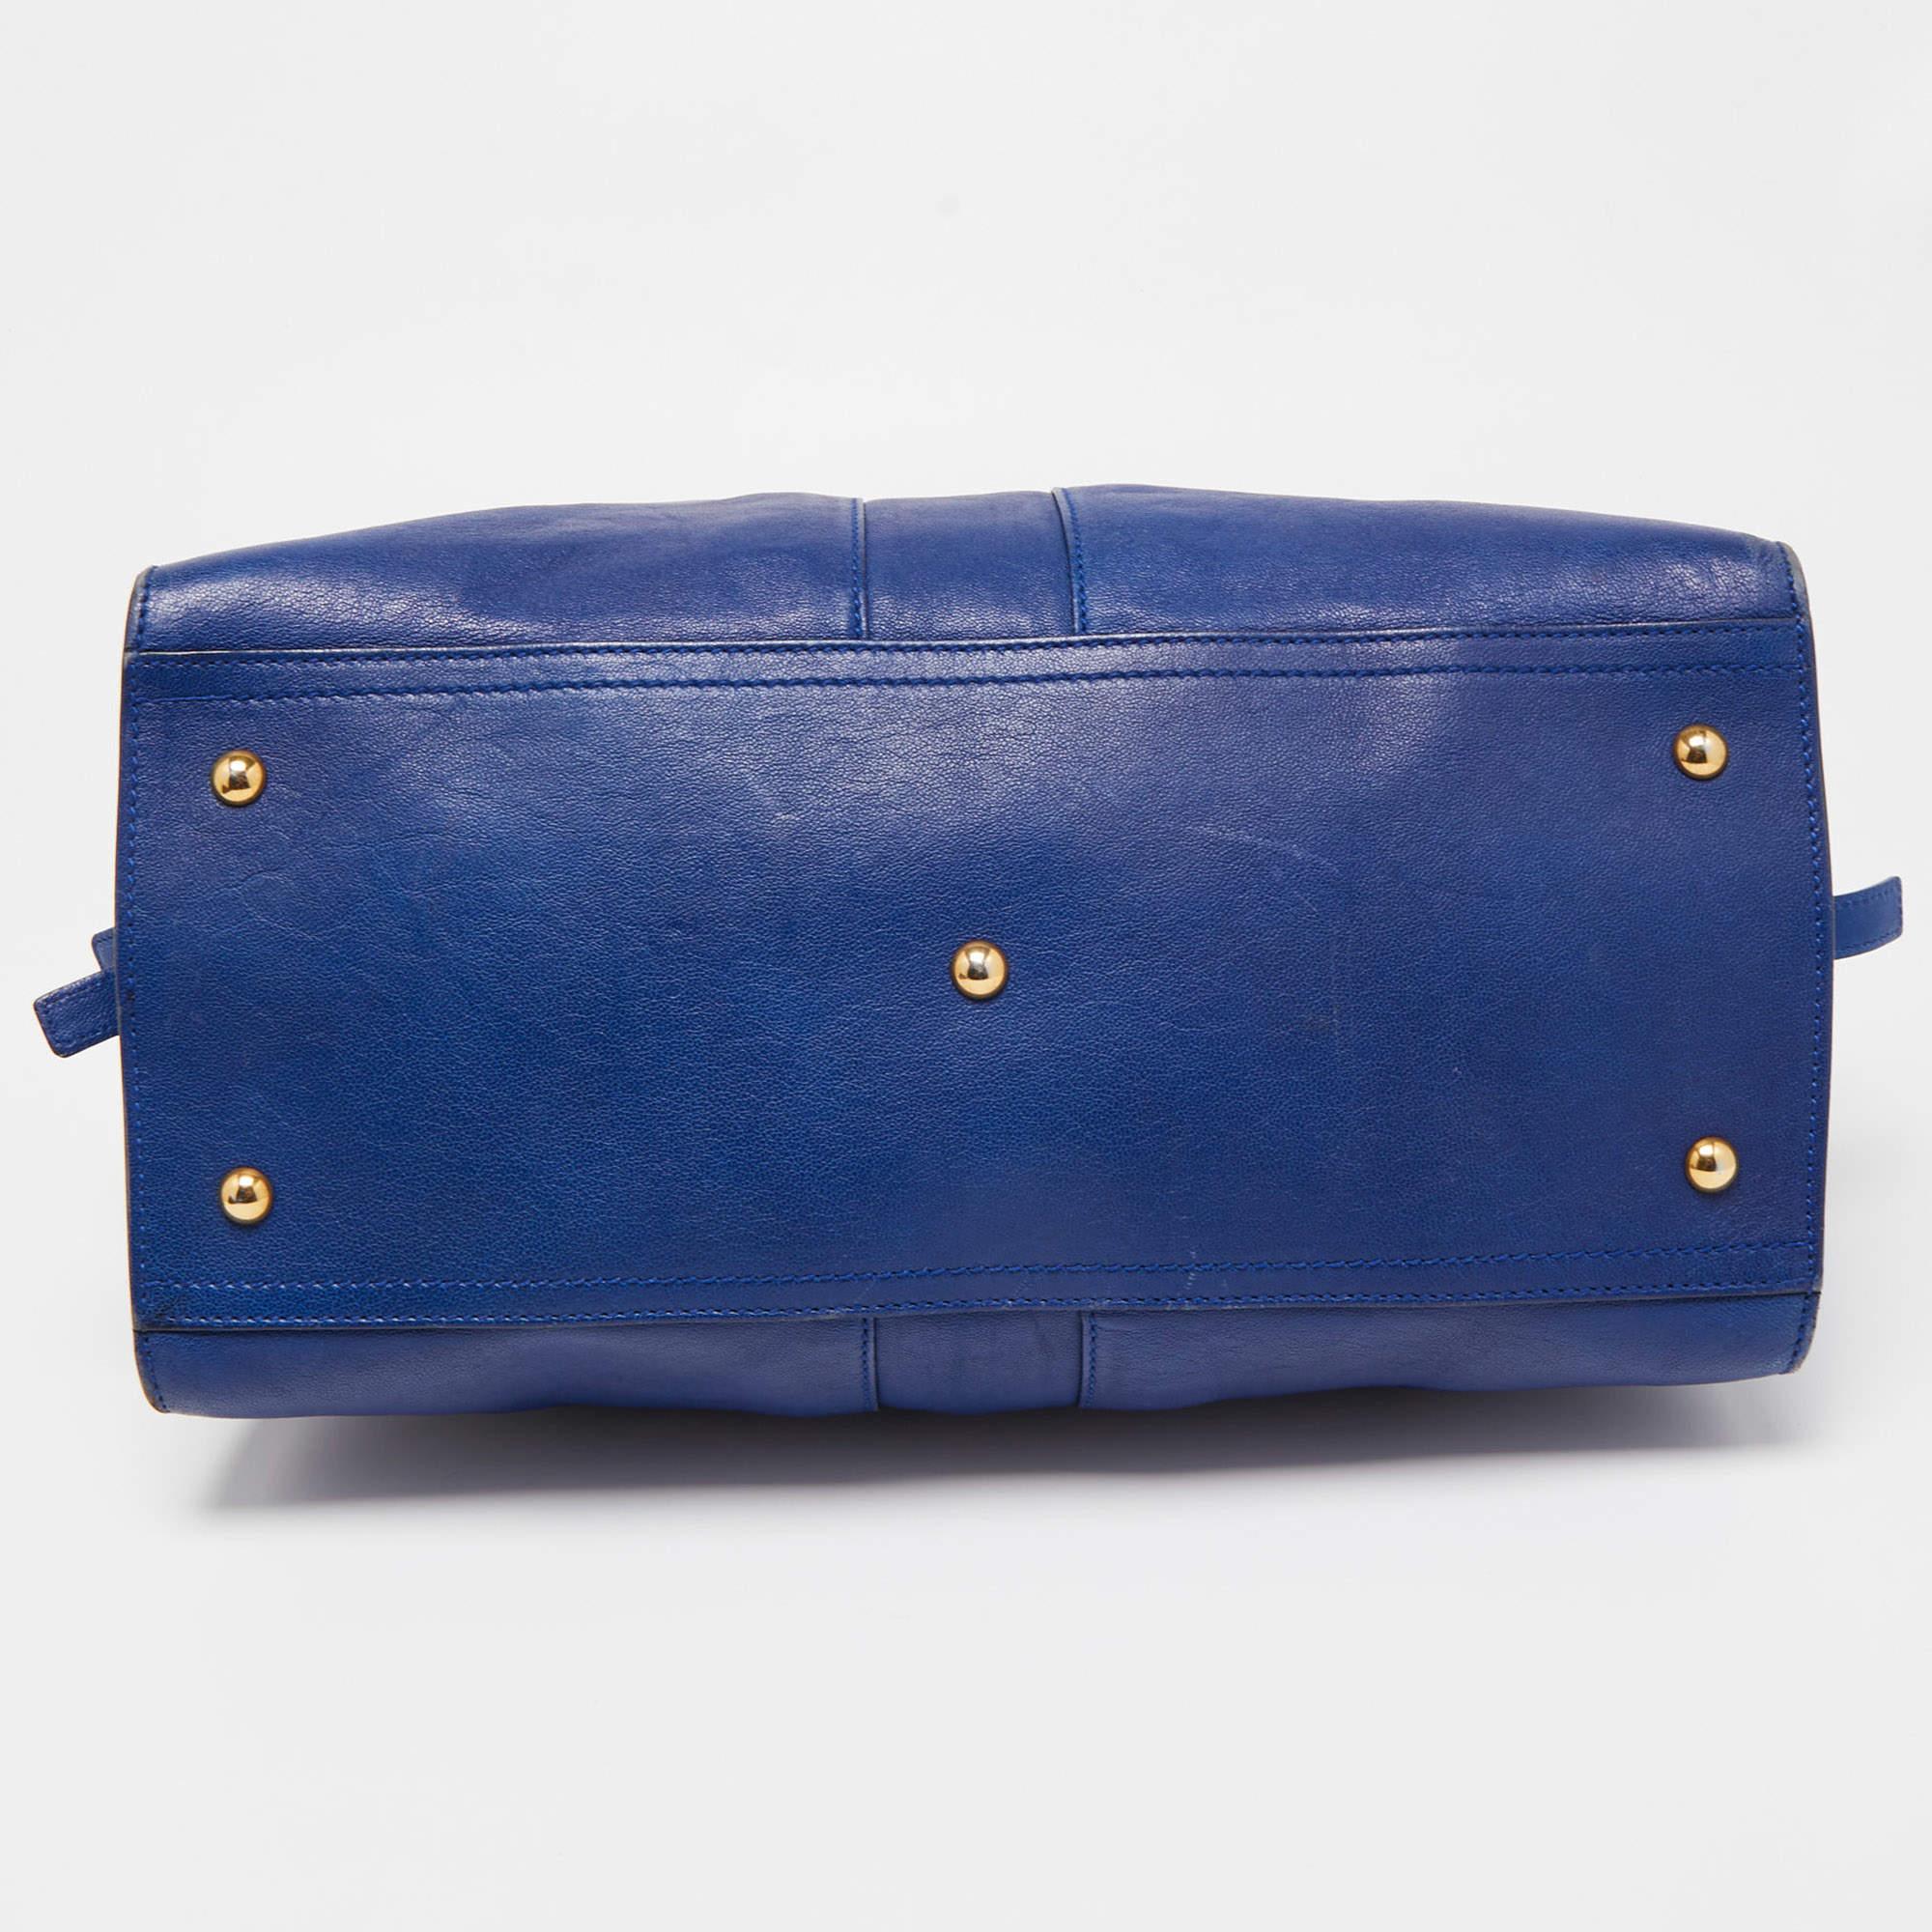 Yves Saint Laurent Blue Leather Medium Cabas Chyc Tote 4